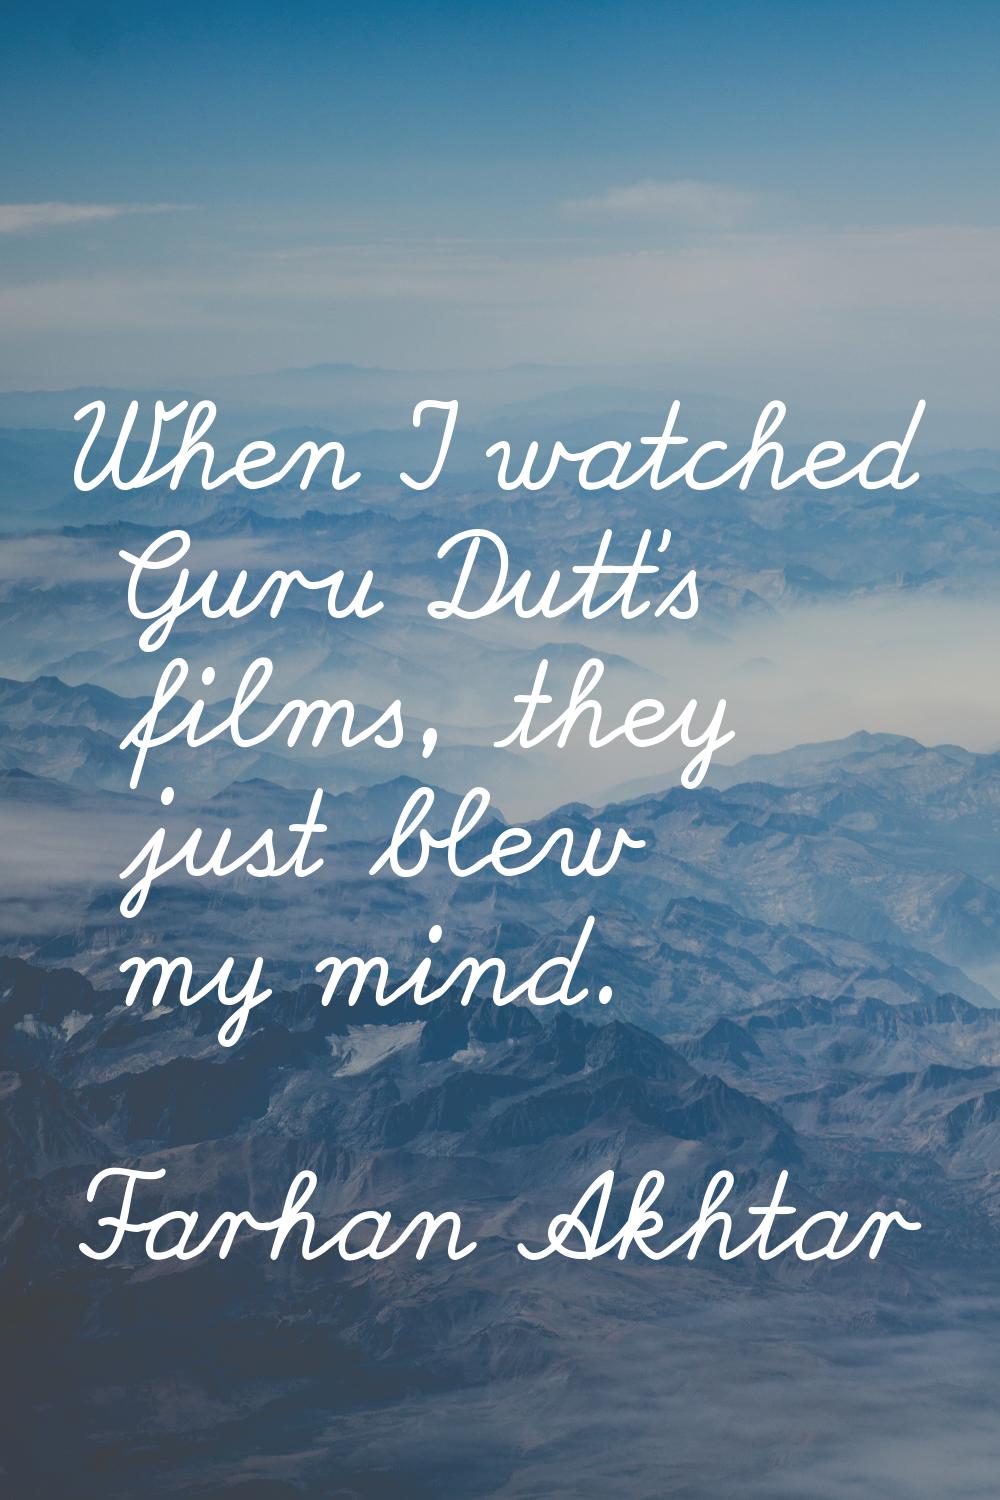 When I watched Guru Dutt's films, they just blew my mind.